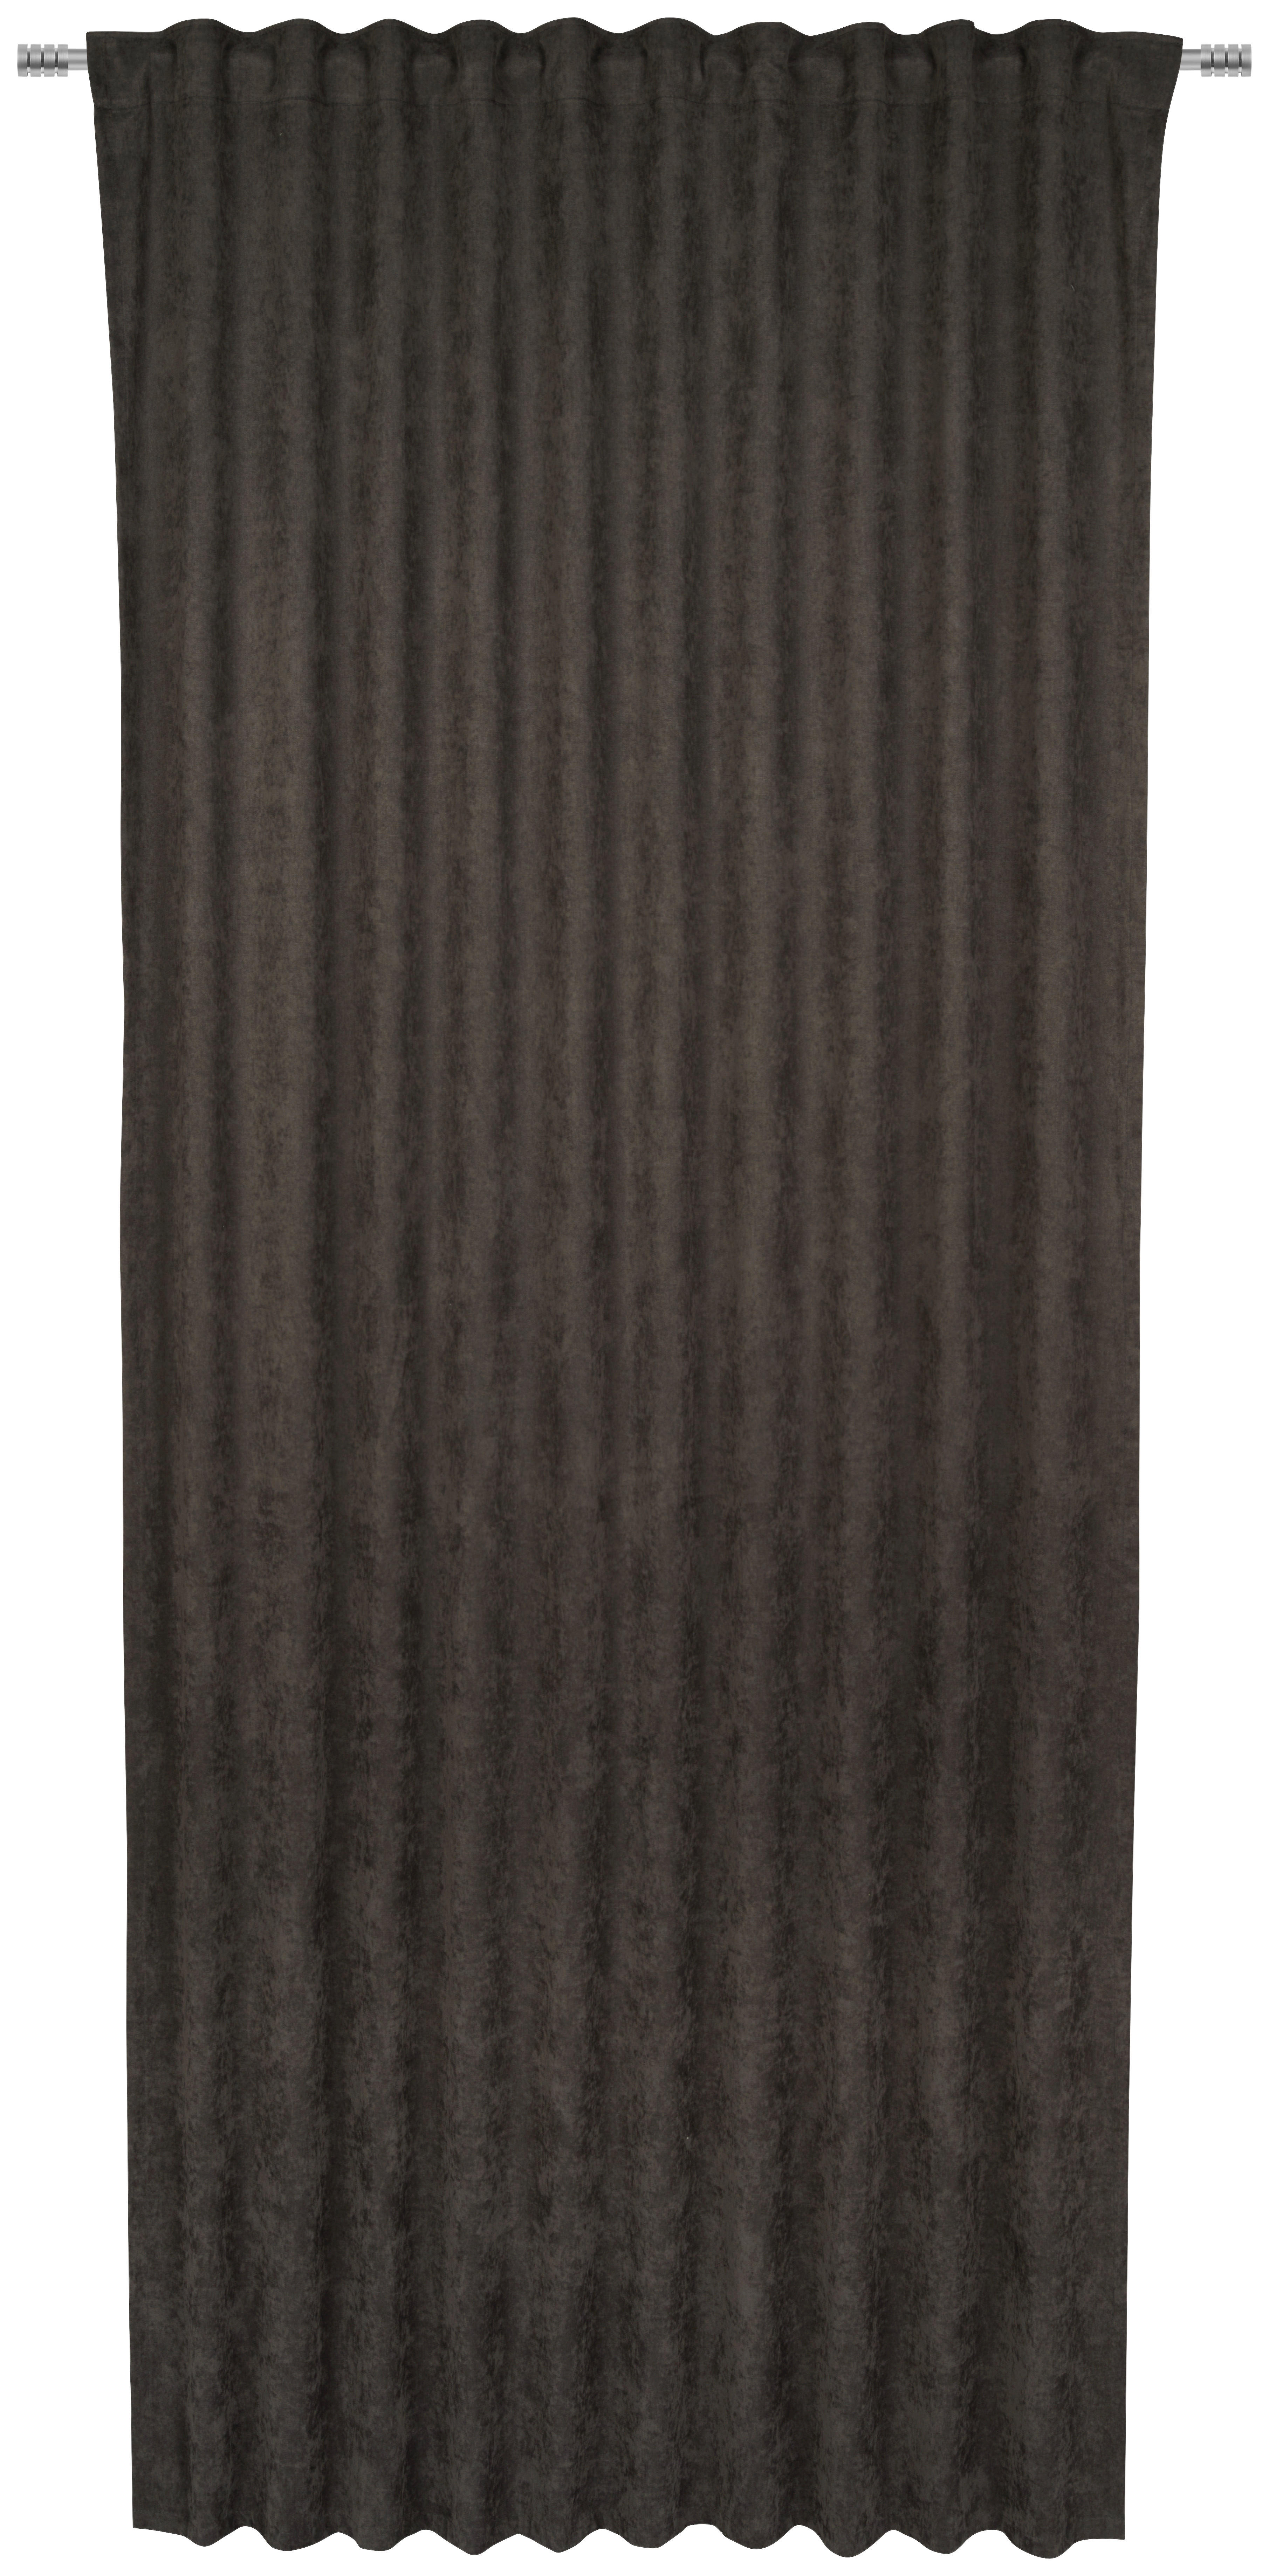 FERTIGVORHANG Harmony blickdicht 140/245 cm   - Anthrazit, Basics, Textil (140/245cm) - Esposa